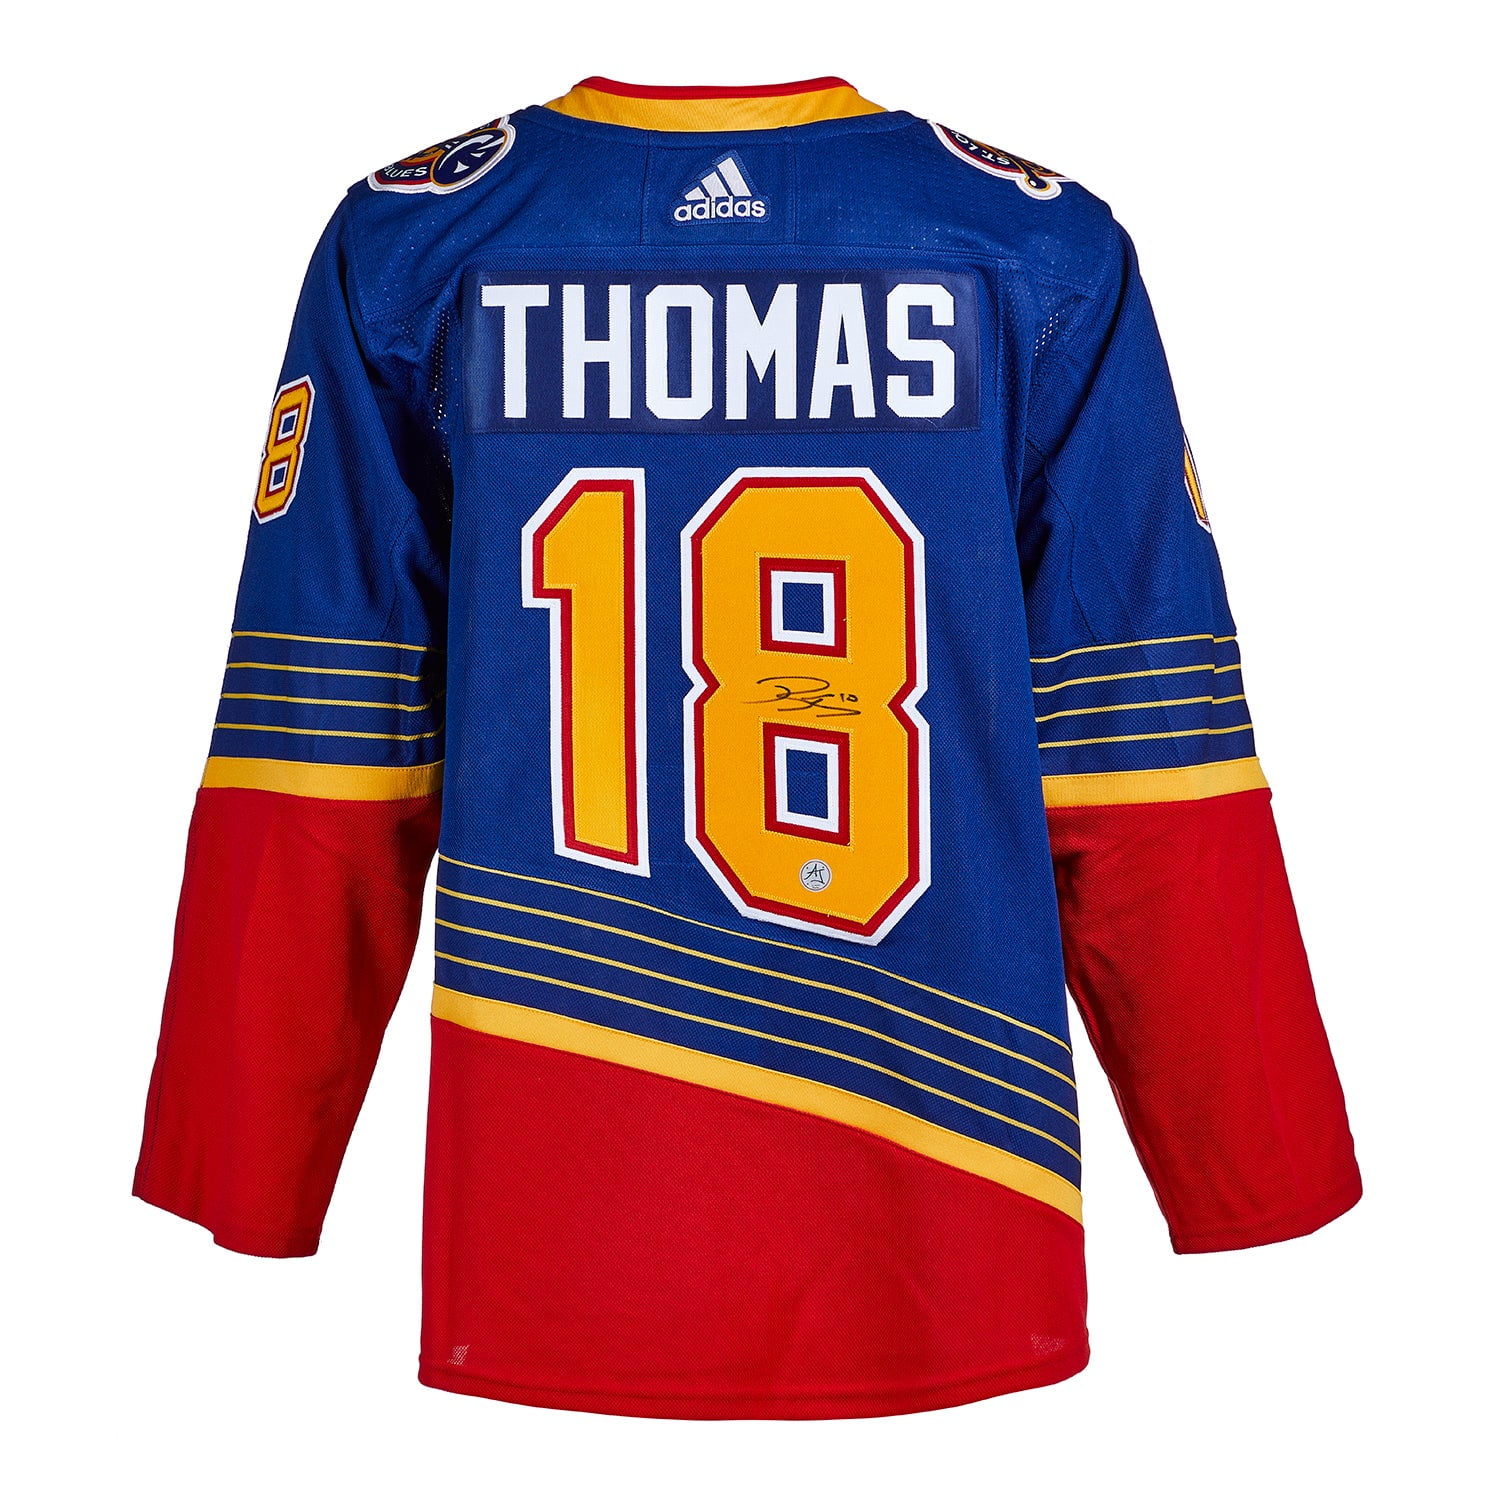 St. Louis Blues Adidas Authentic Third Alternate NHL Hockey Jersey